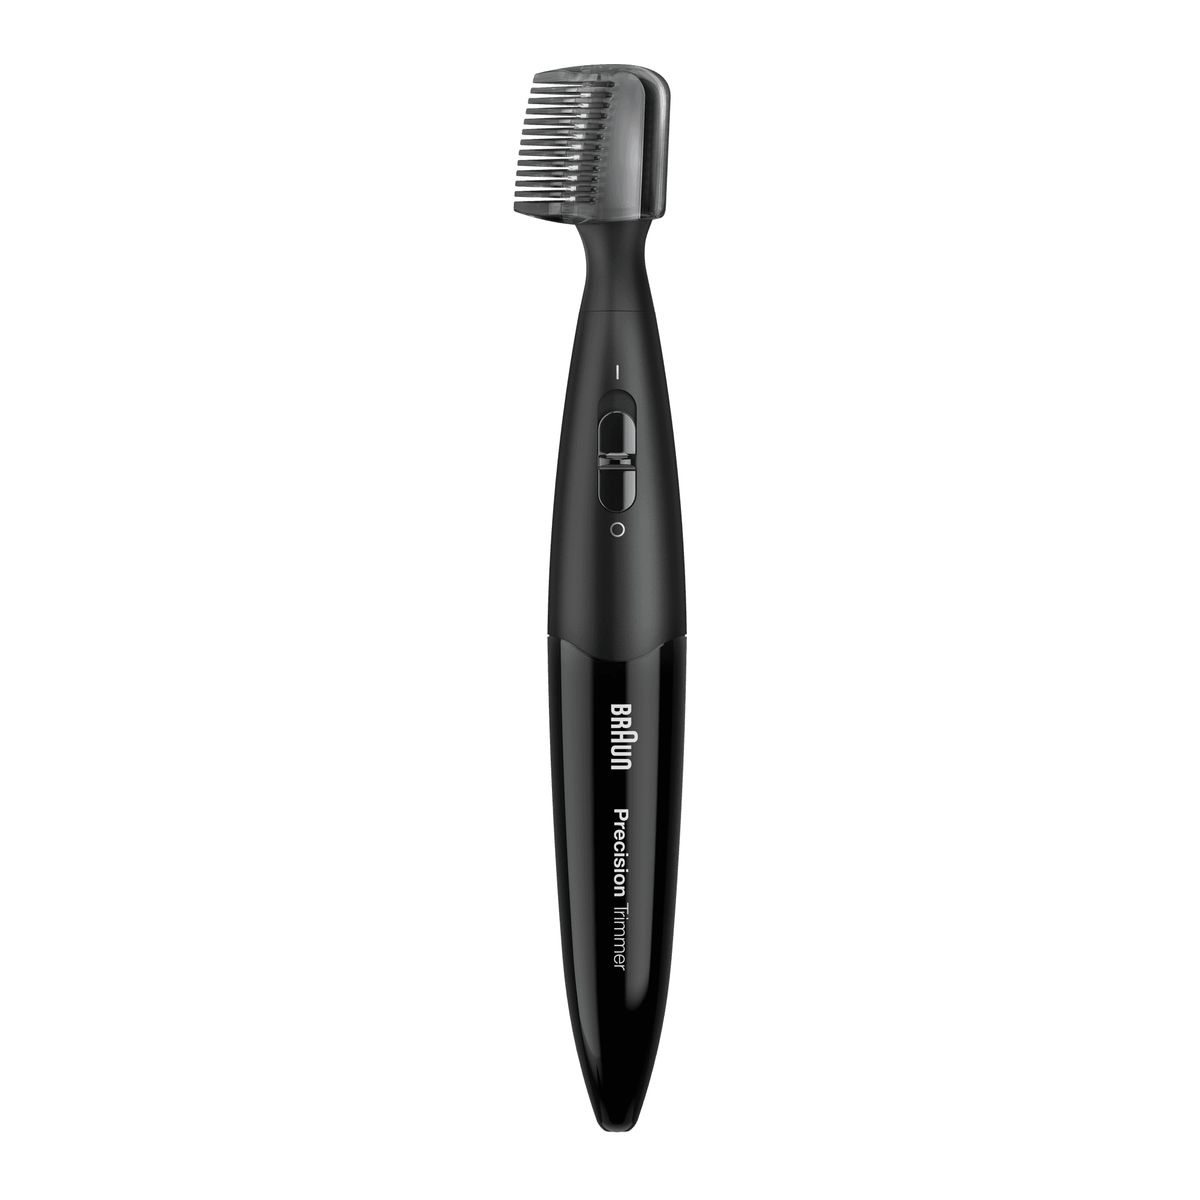 Braun PT5010 Beard hair remover, wet and dry, Black, 8 mm, Beard, Black, Battery, 120 min, AAA